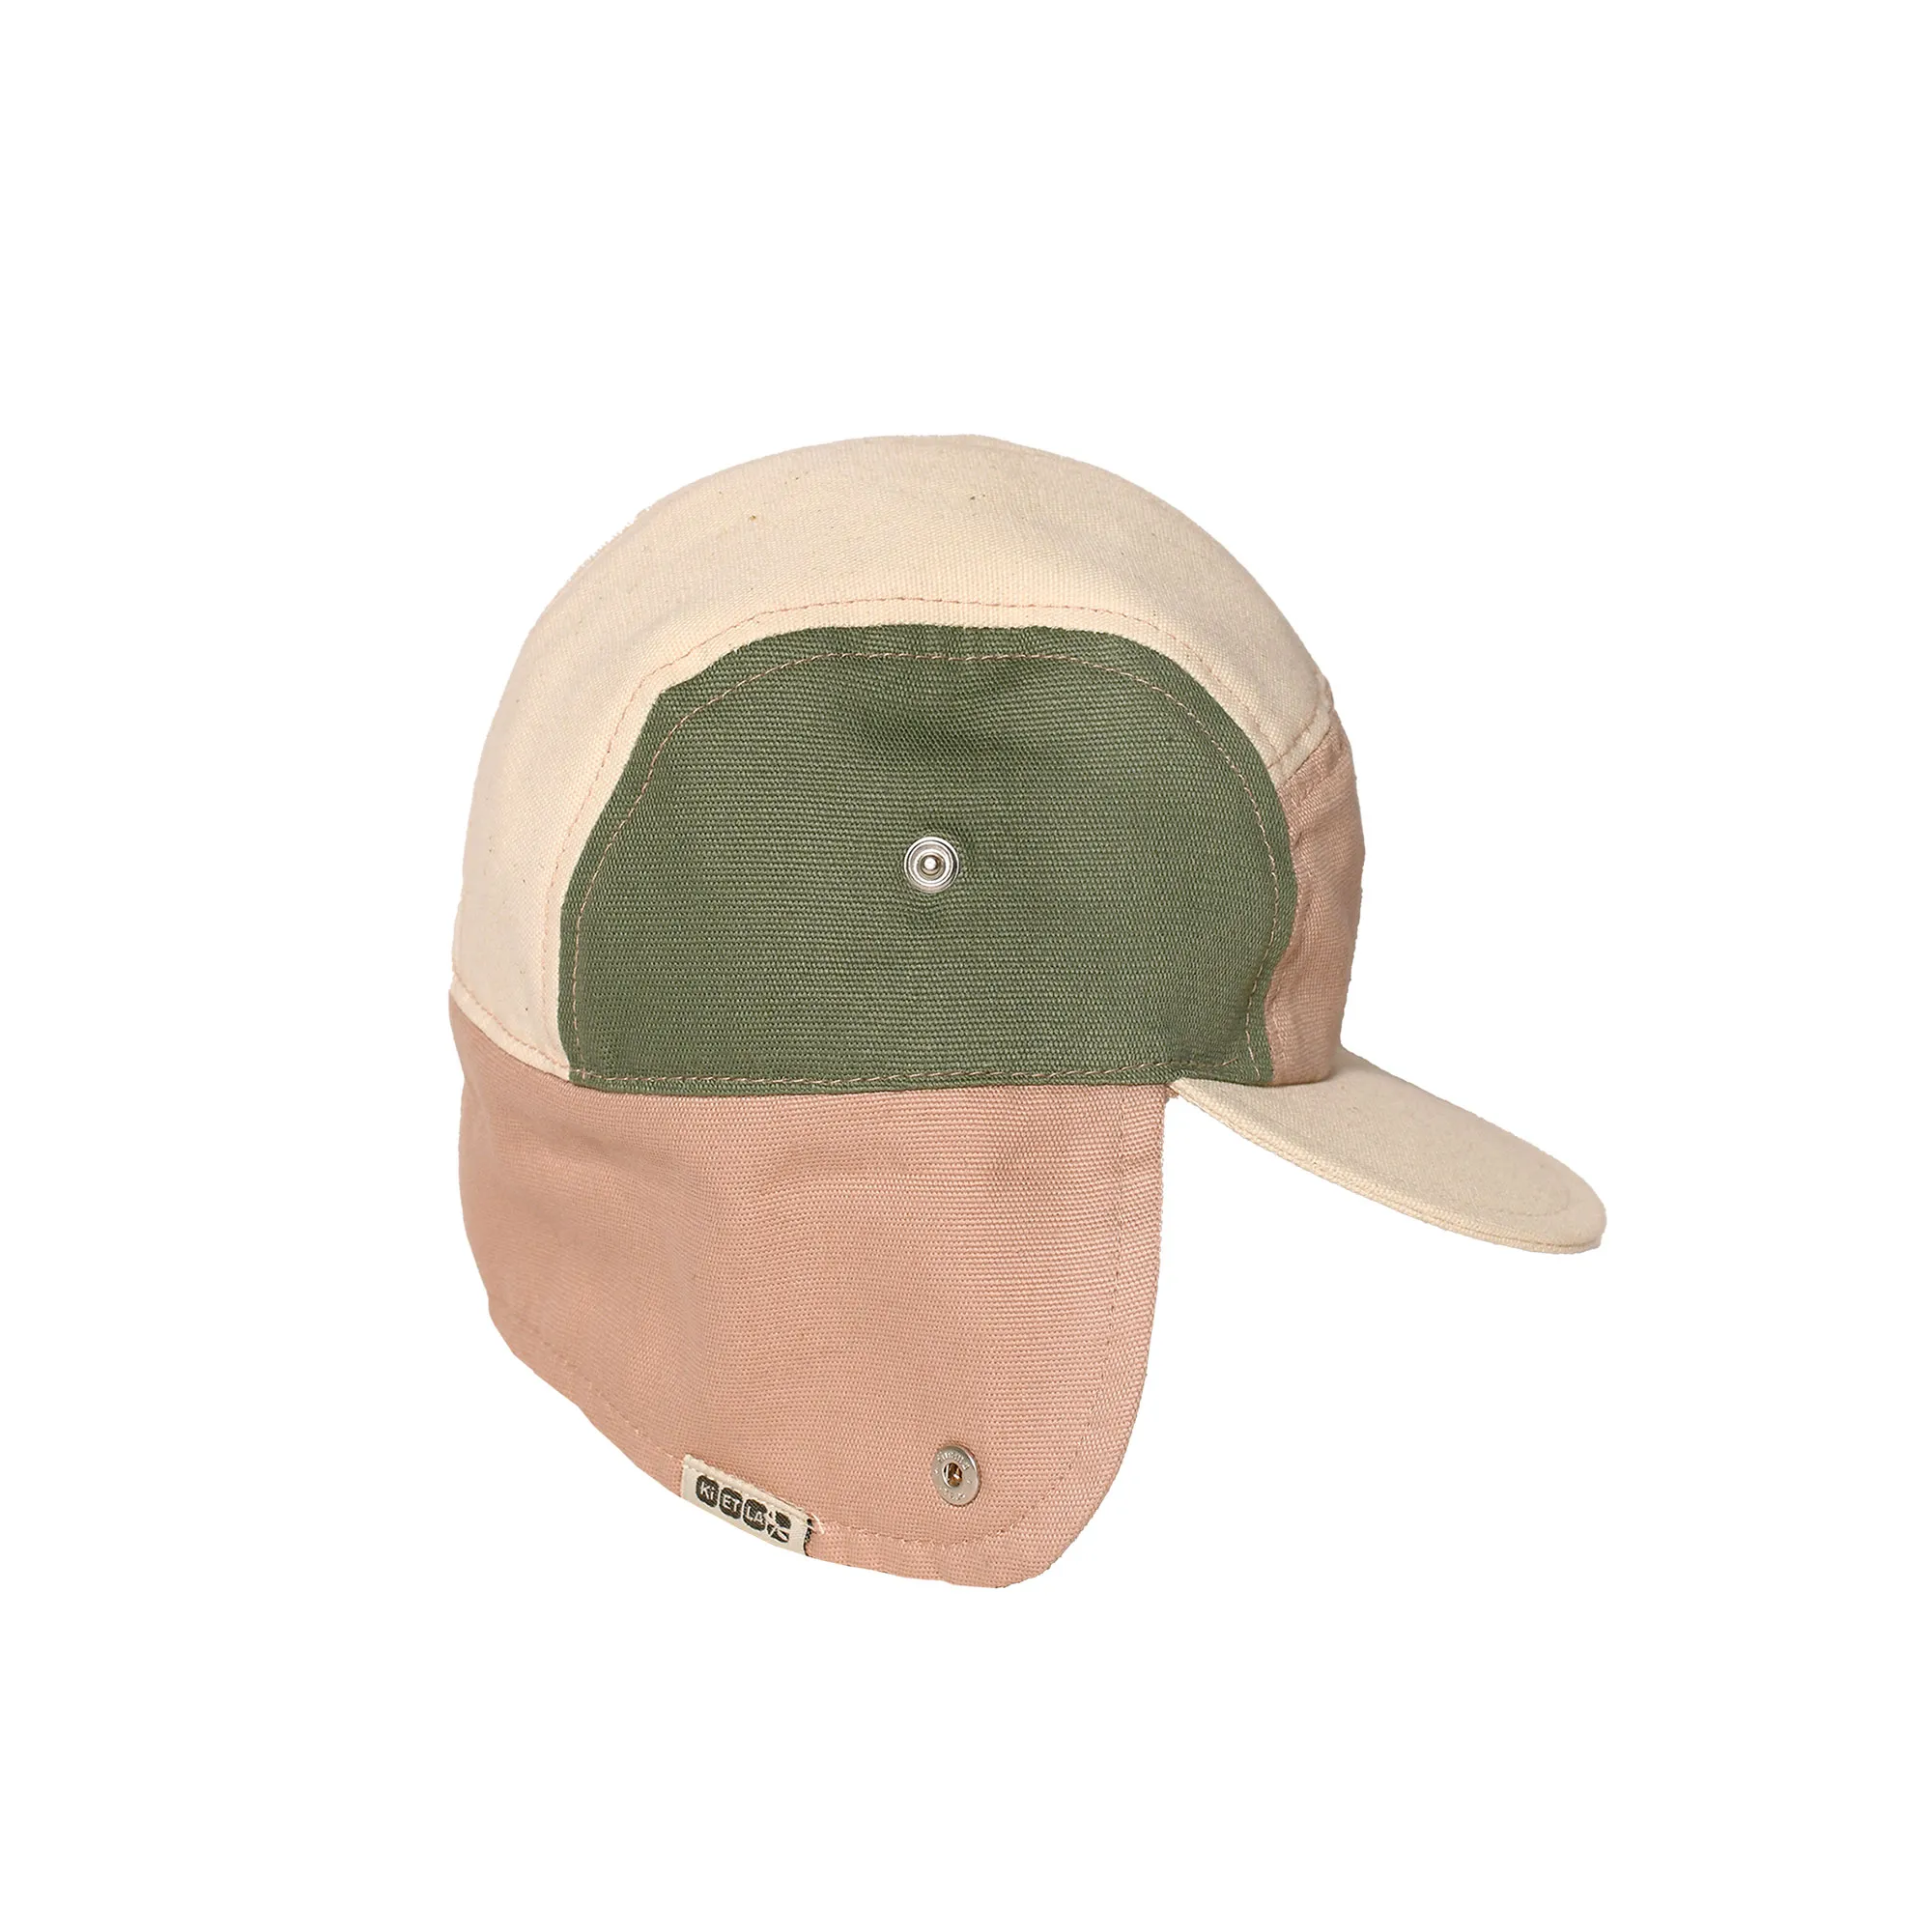 KiETLA šiltovka s ochranou krku s UV ochranou 1-2 roky - Green / Natural / Pink 1×1 ks, detská šiltovka